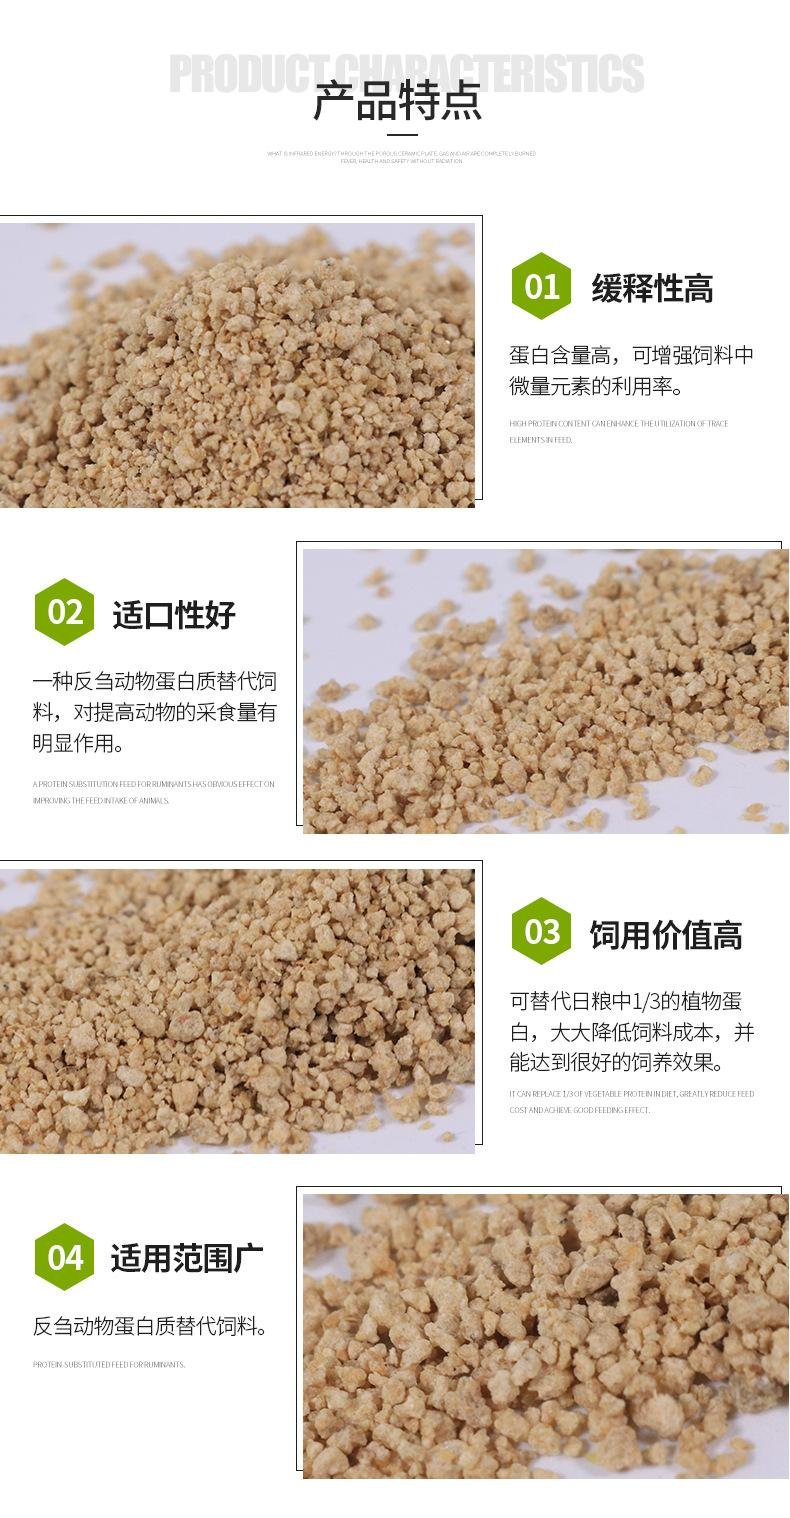 Puffed urea ruminant refined feed additives Shandong Tongsheng manufacturers 3